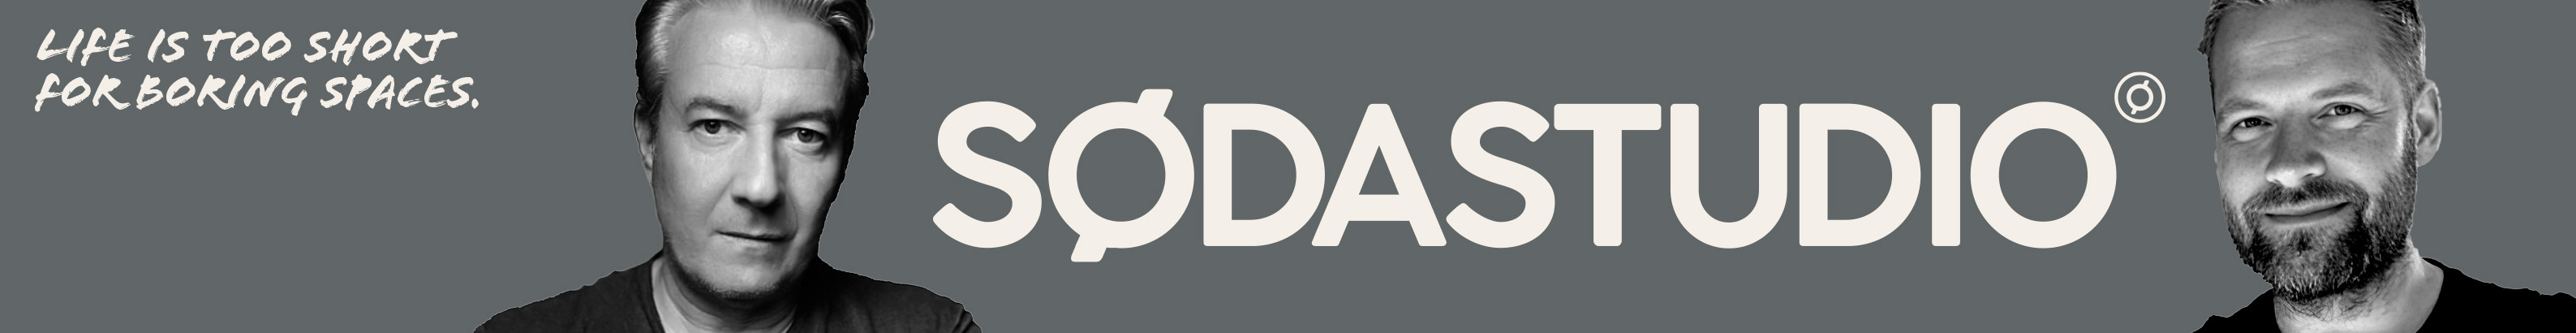 SODA STUDIO's profile banner